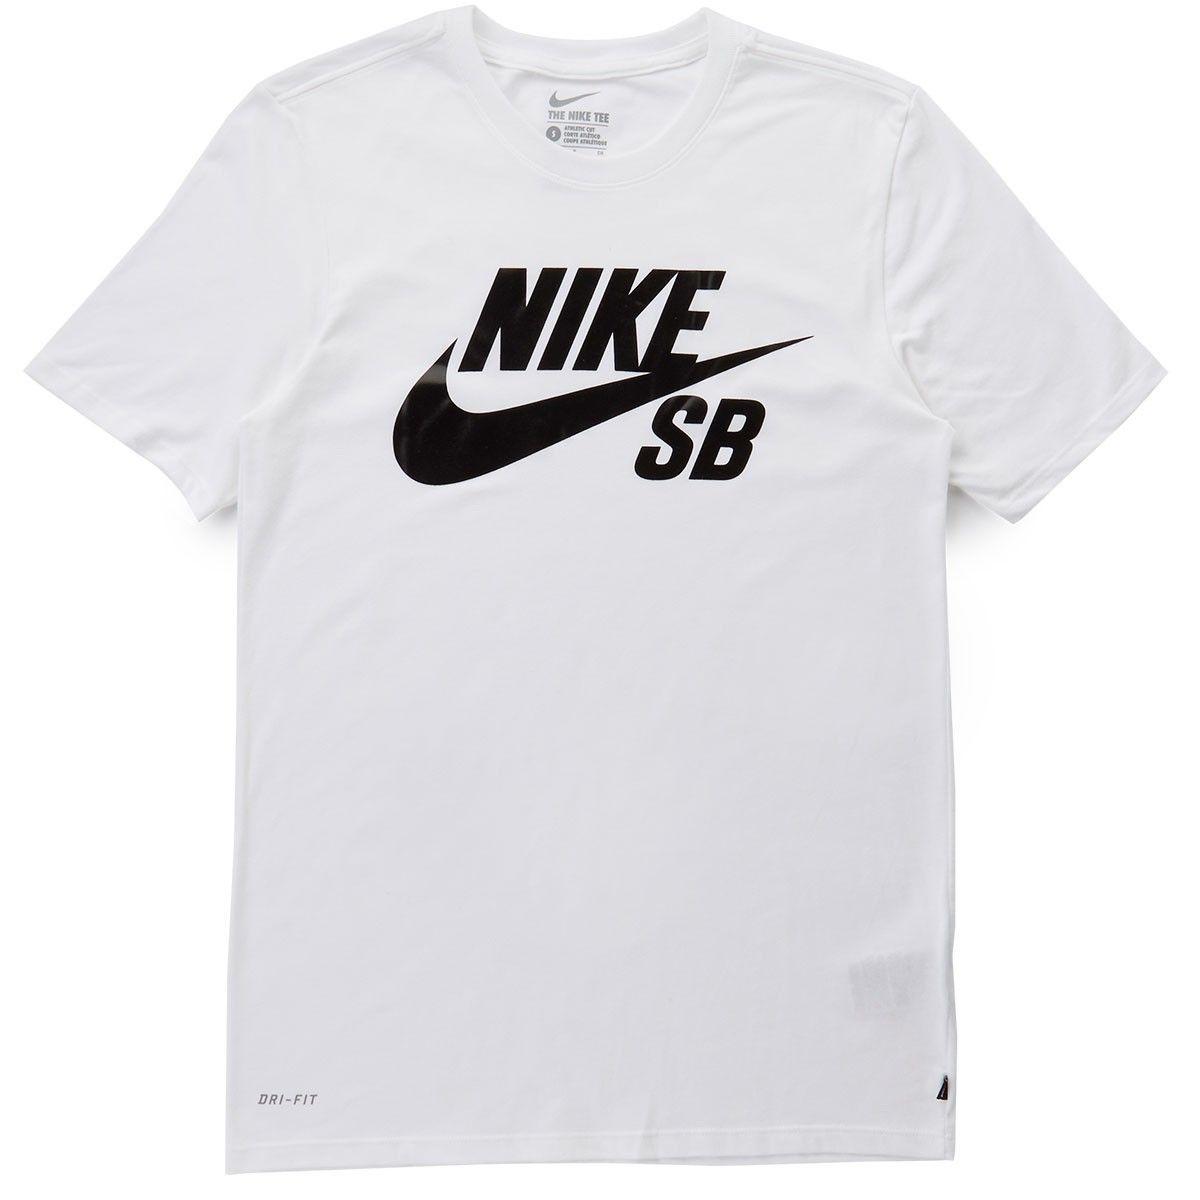 Nike SB Clothing Logo - Nike SB Logo T-Shirt - White/White/Black